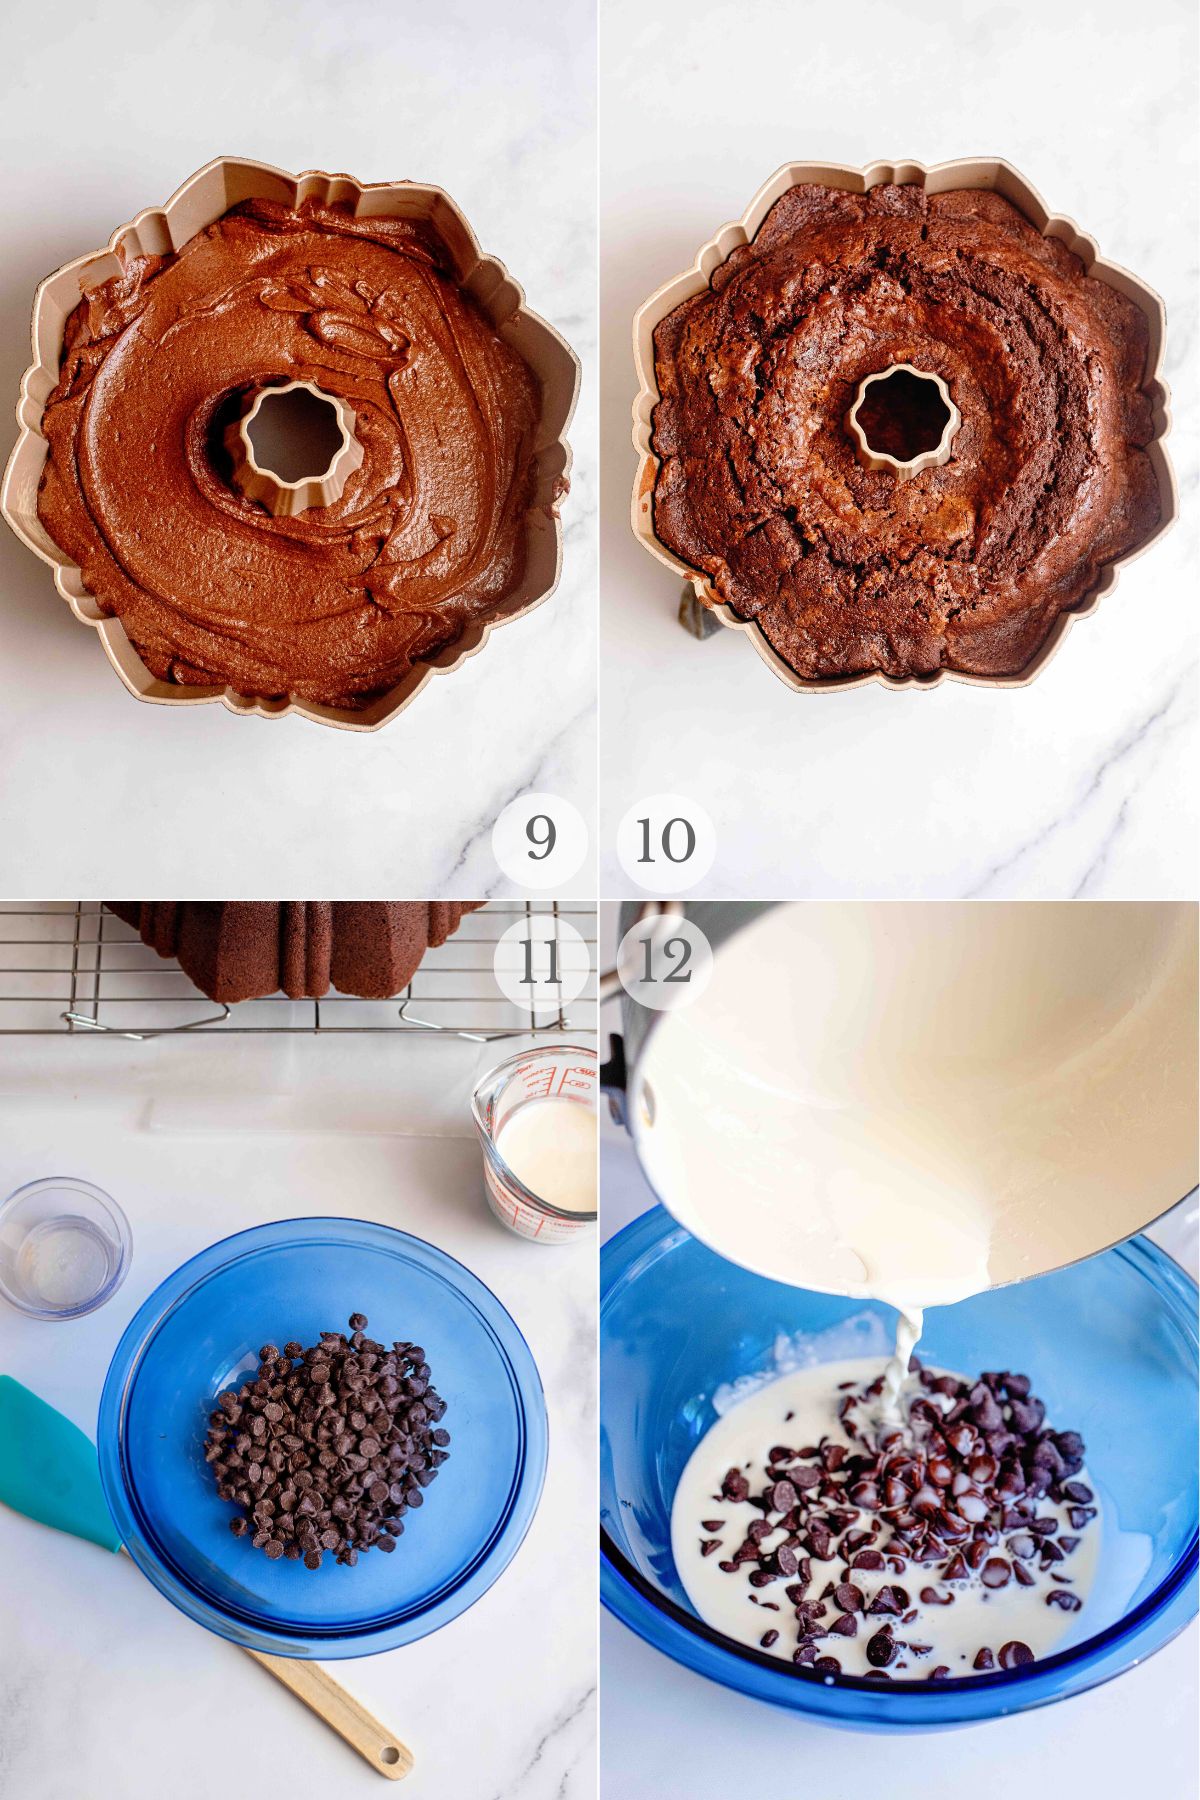 chocolate pound cake recipe steps 9-12.